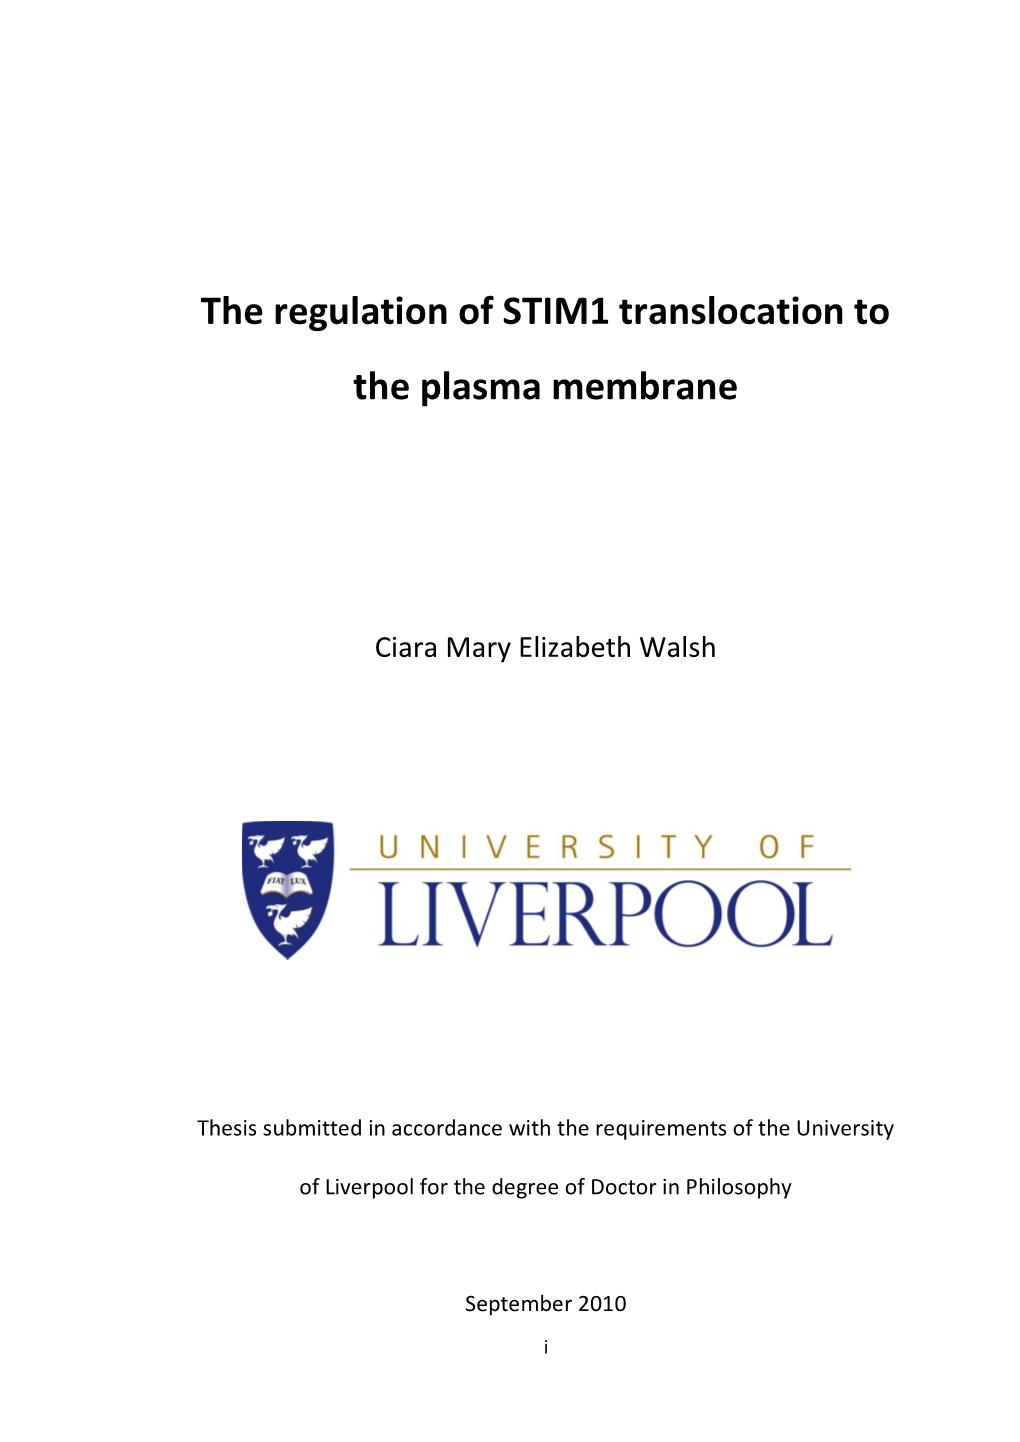 The Regulation of STIM1 Translocation to the Plasma Membrane